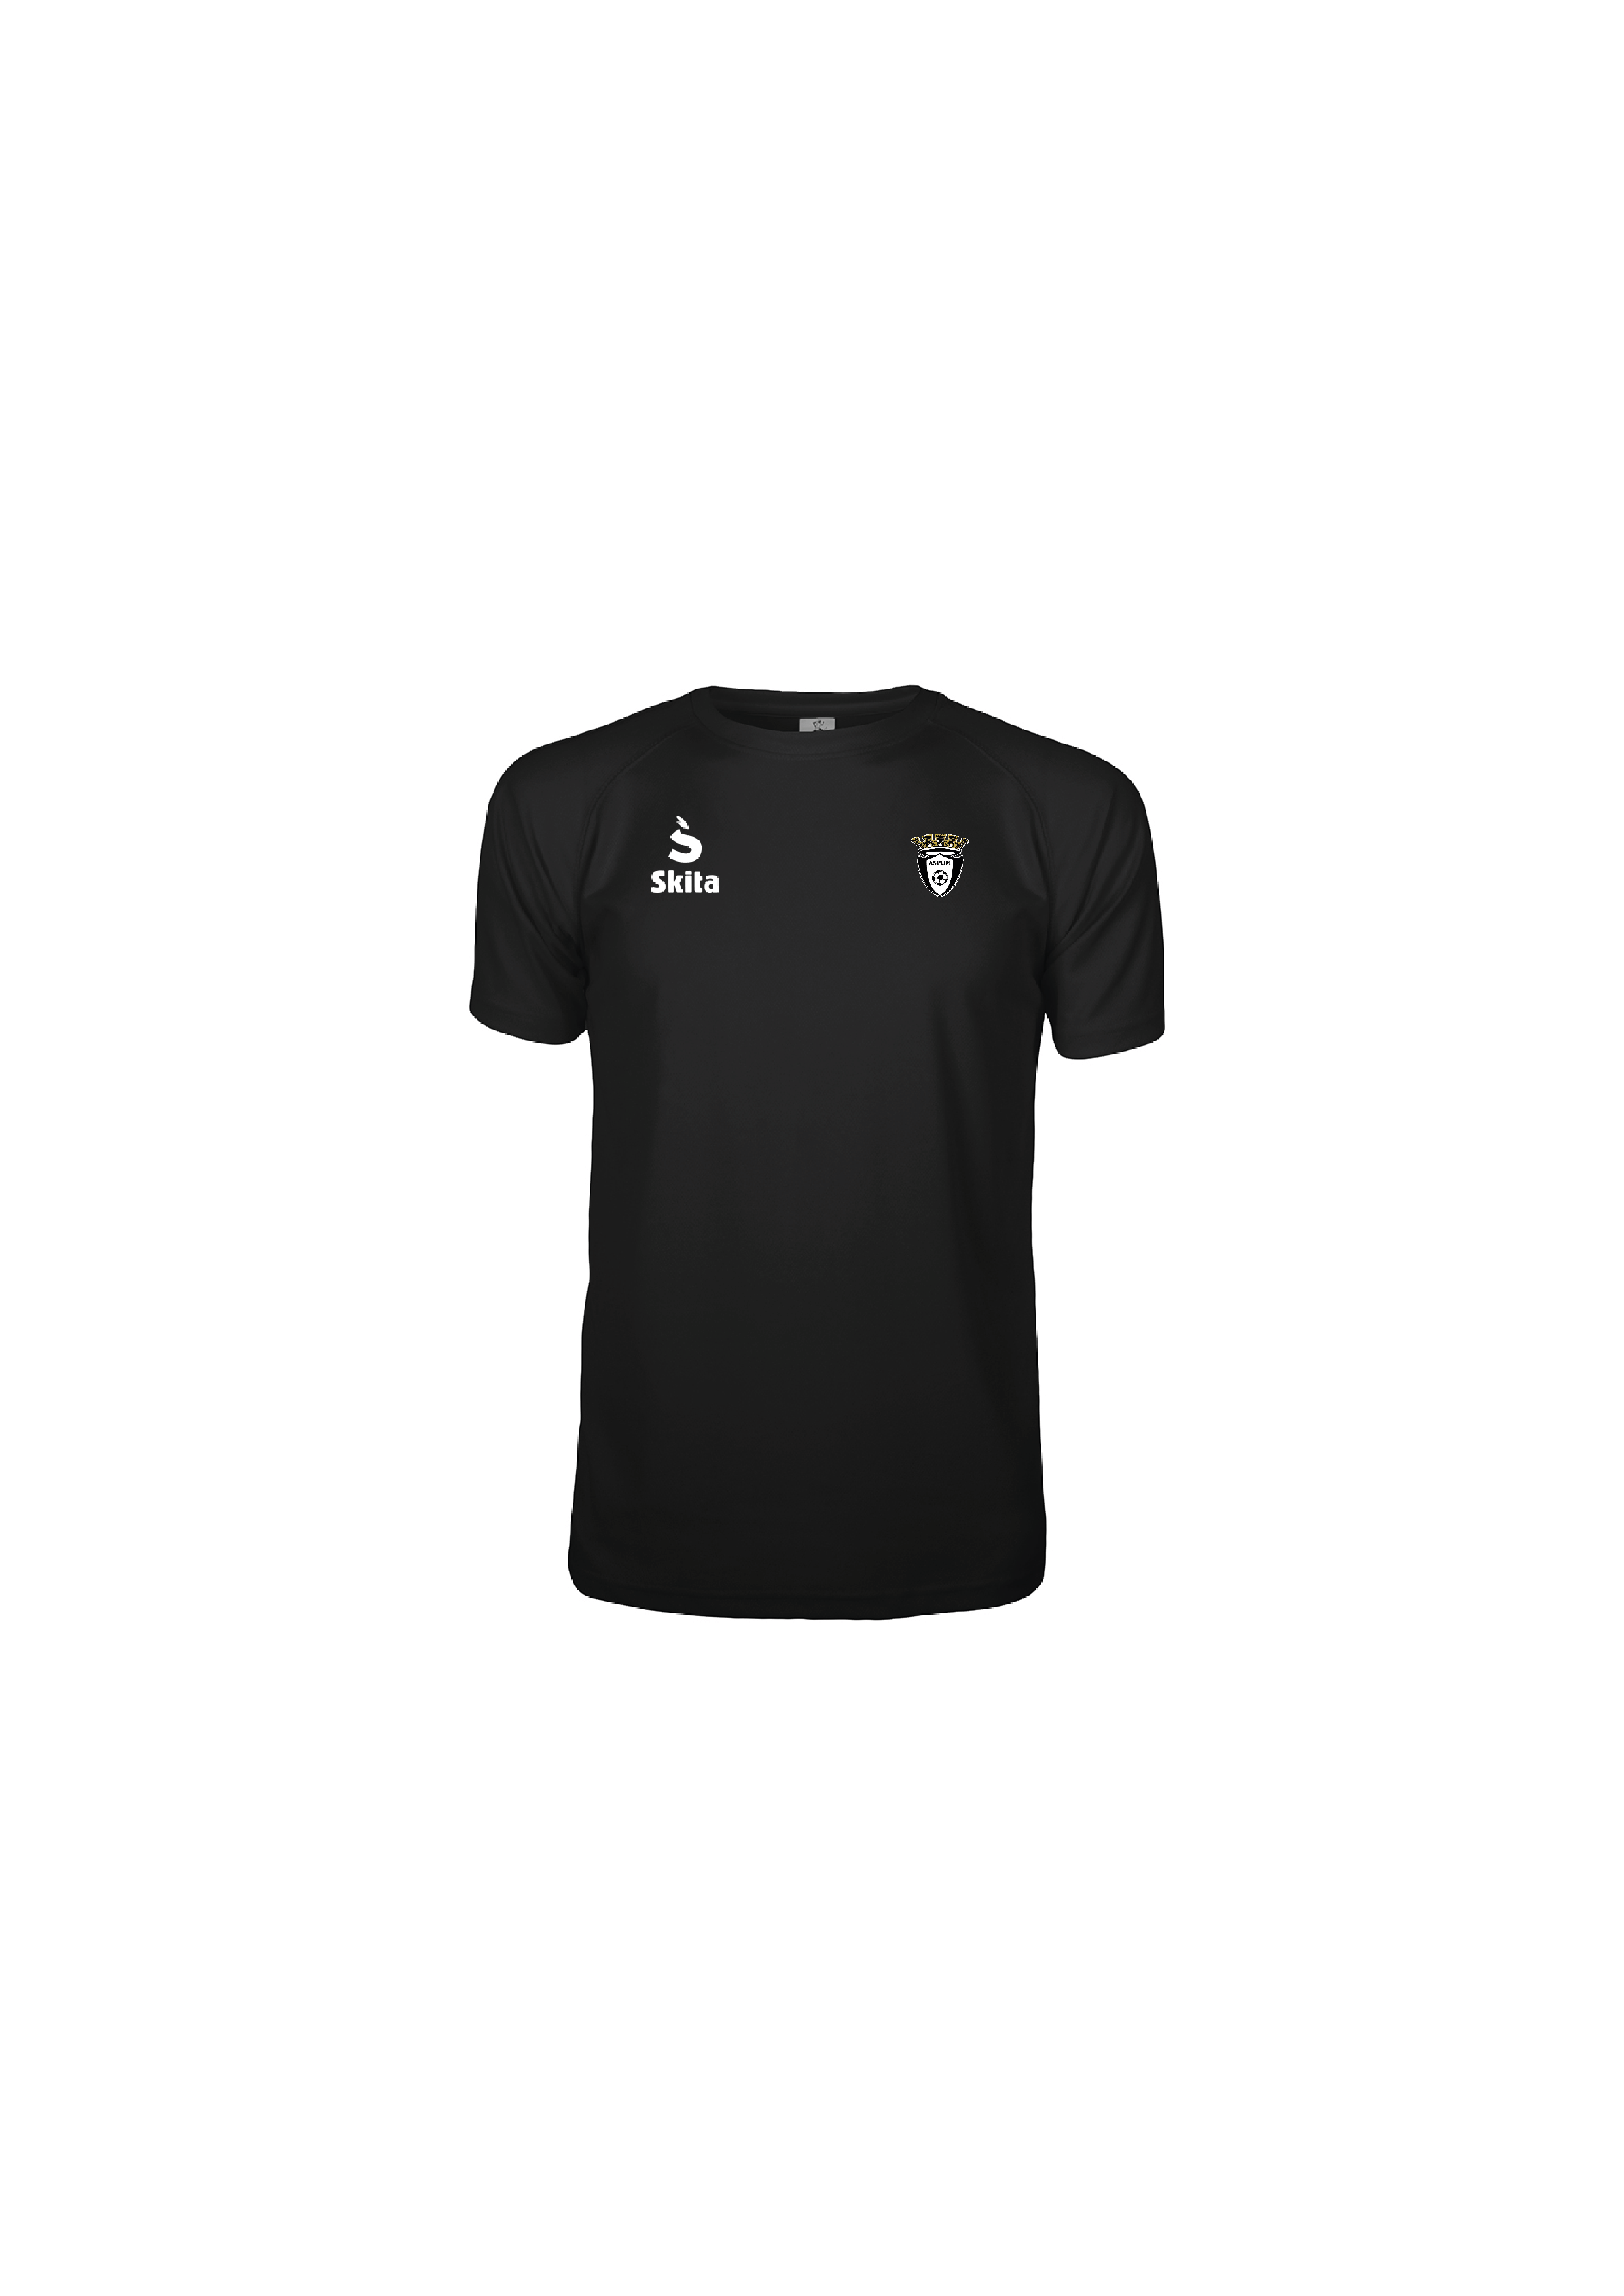 T-shirt respirant noir (AS PORTUGAIS DE L'OURQ DE MITRY)